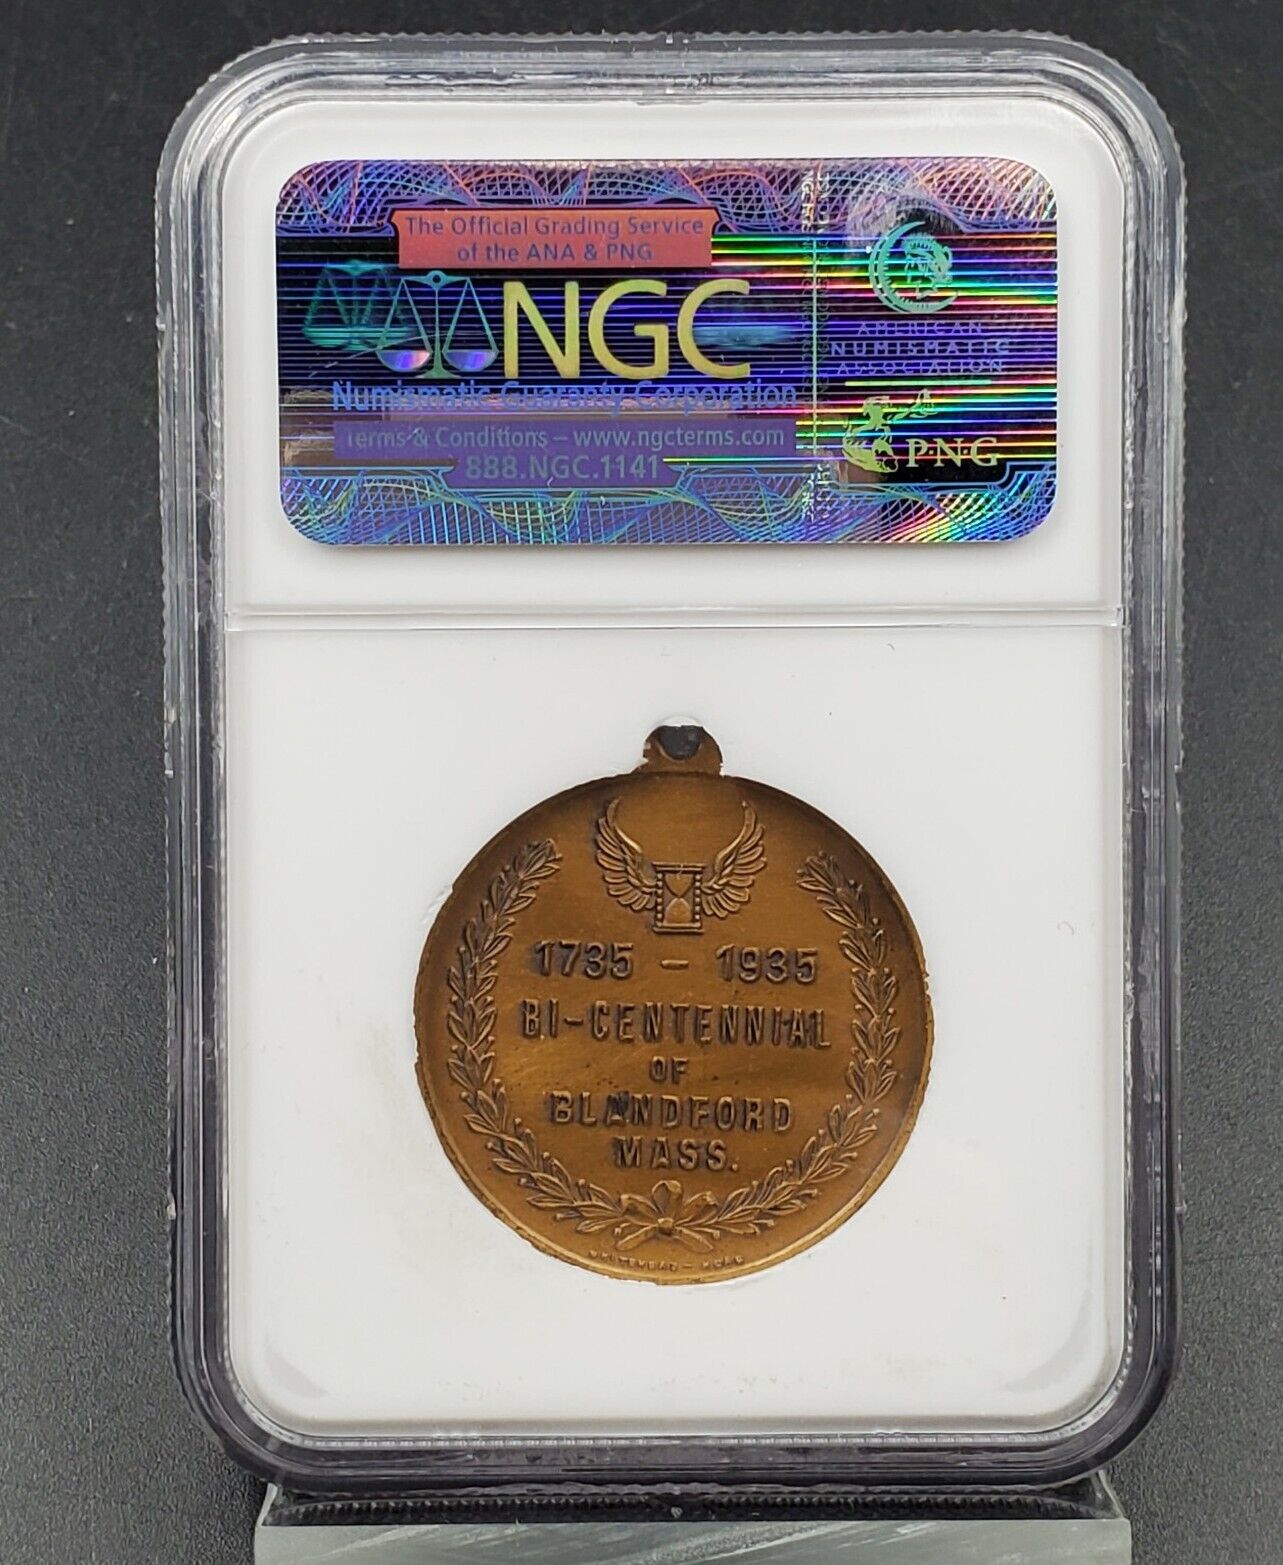 1935 MA Blandford Bicentennial AE 31.5 mm NGC medal MS65